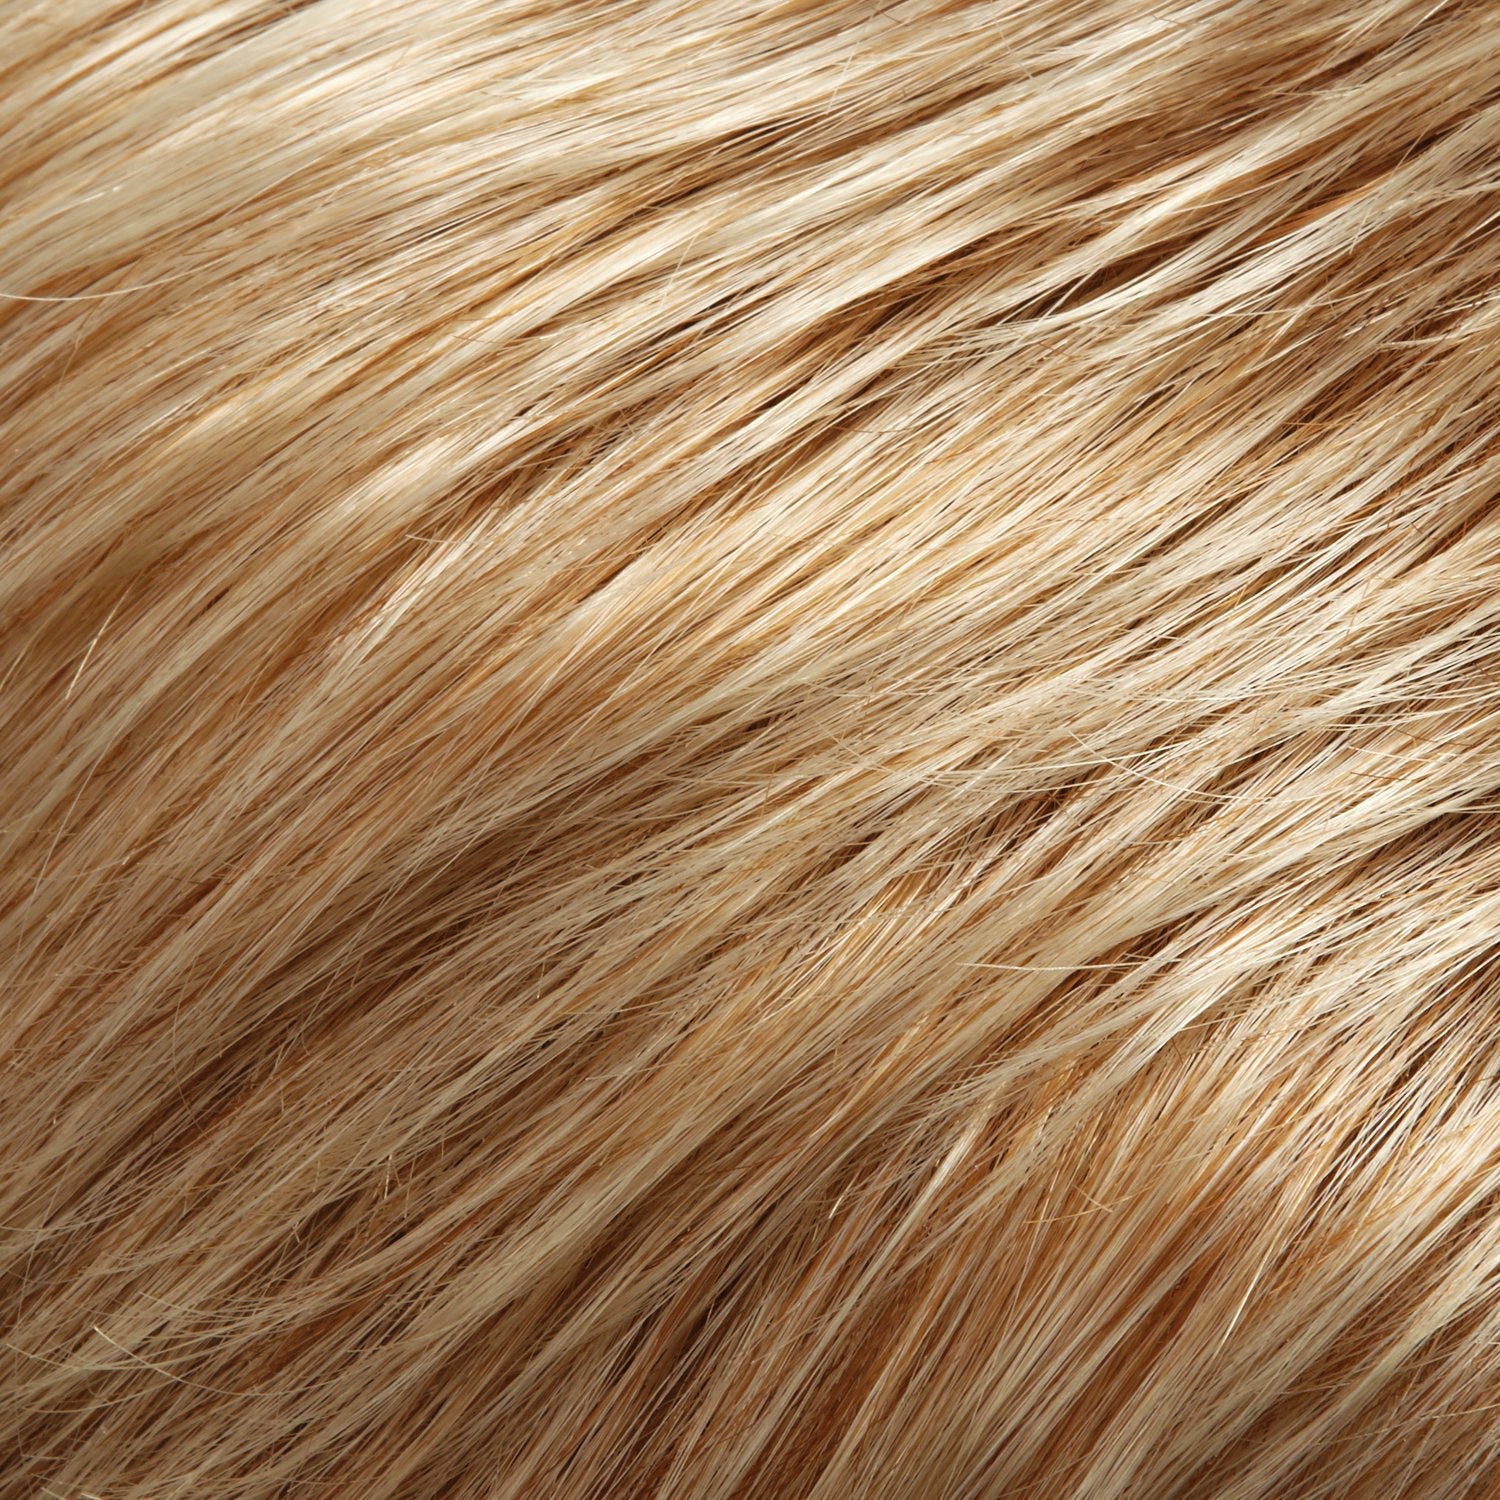 27T613 medium red gold blonde  & pale natural gold blonde blend w/ pale tips